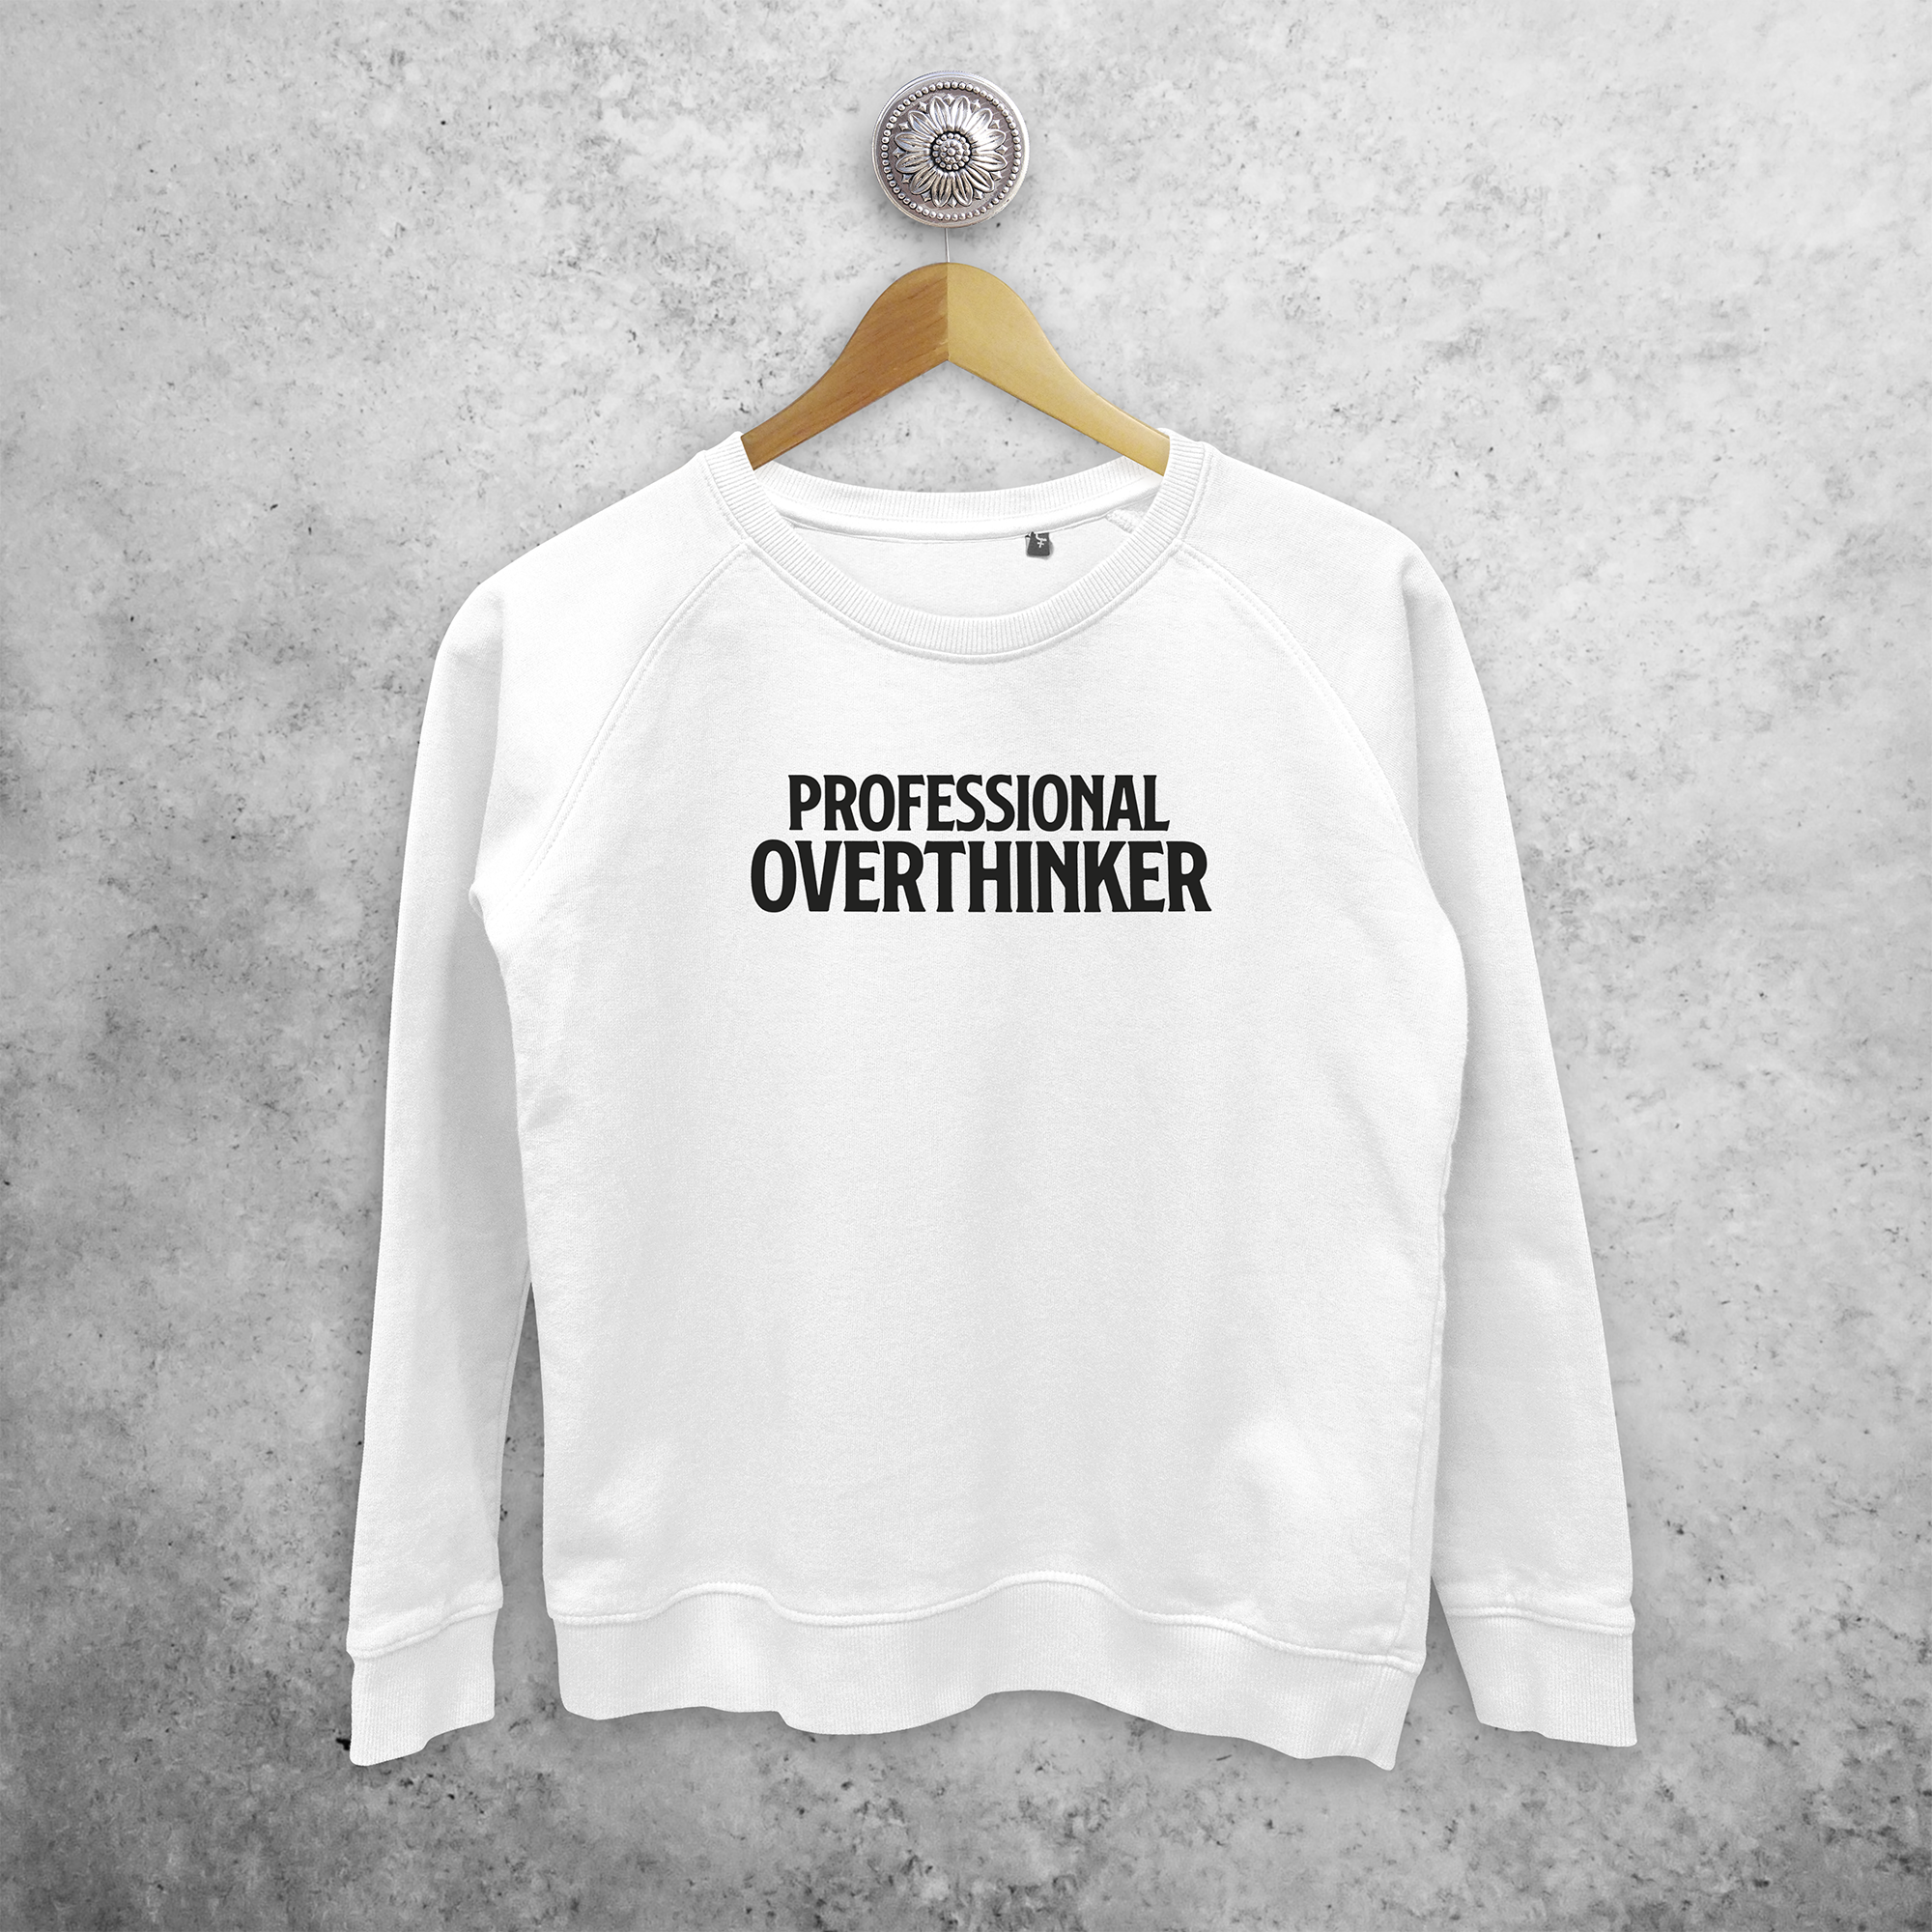 'Professional overthinker' trui